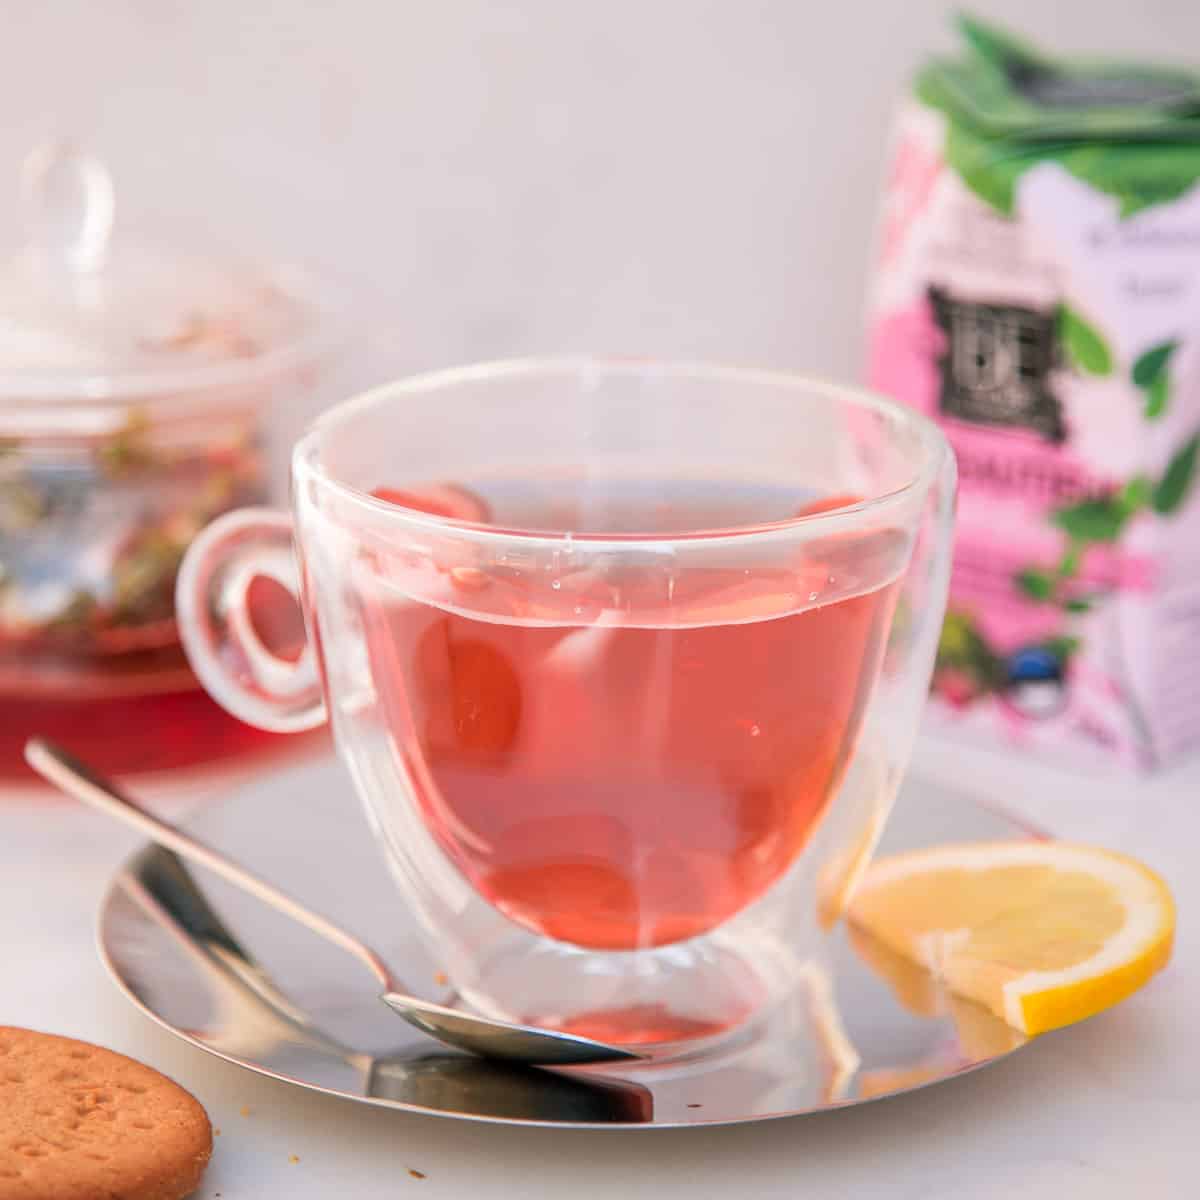 Tea combo: I want it all!